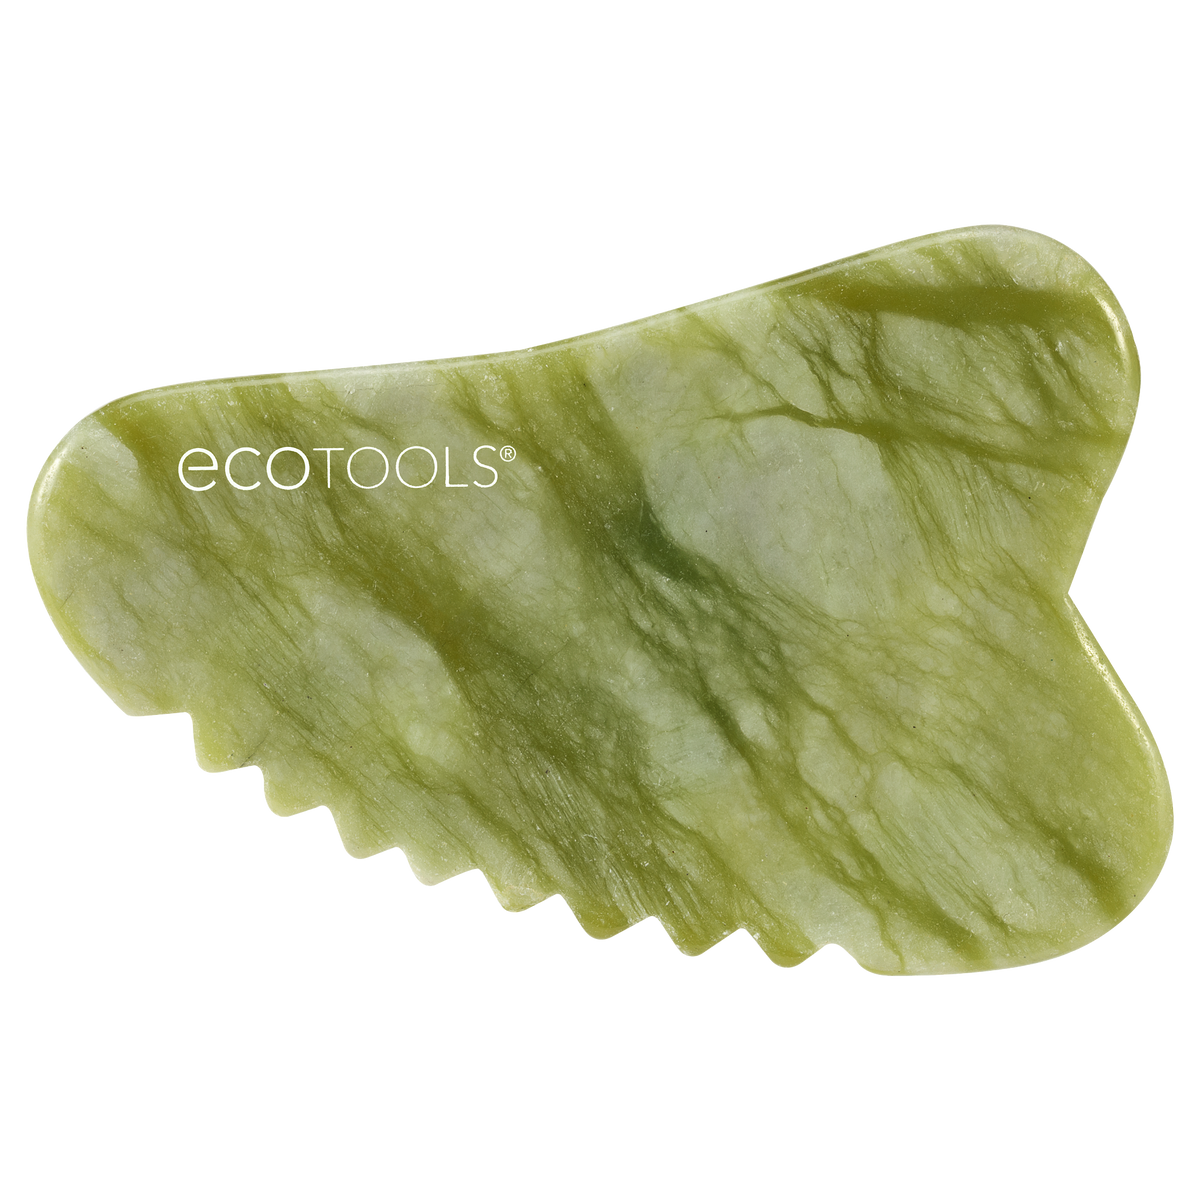 Eco Tools Jade Body Gua Sha Stone, Stimulating and Sculpting